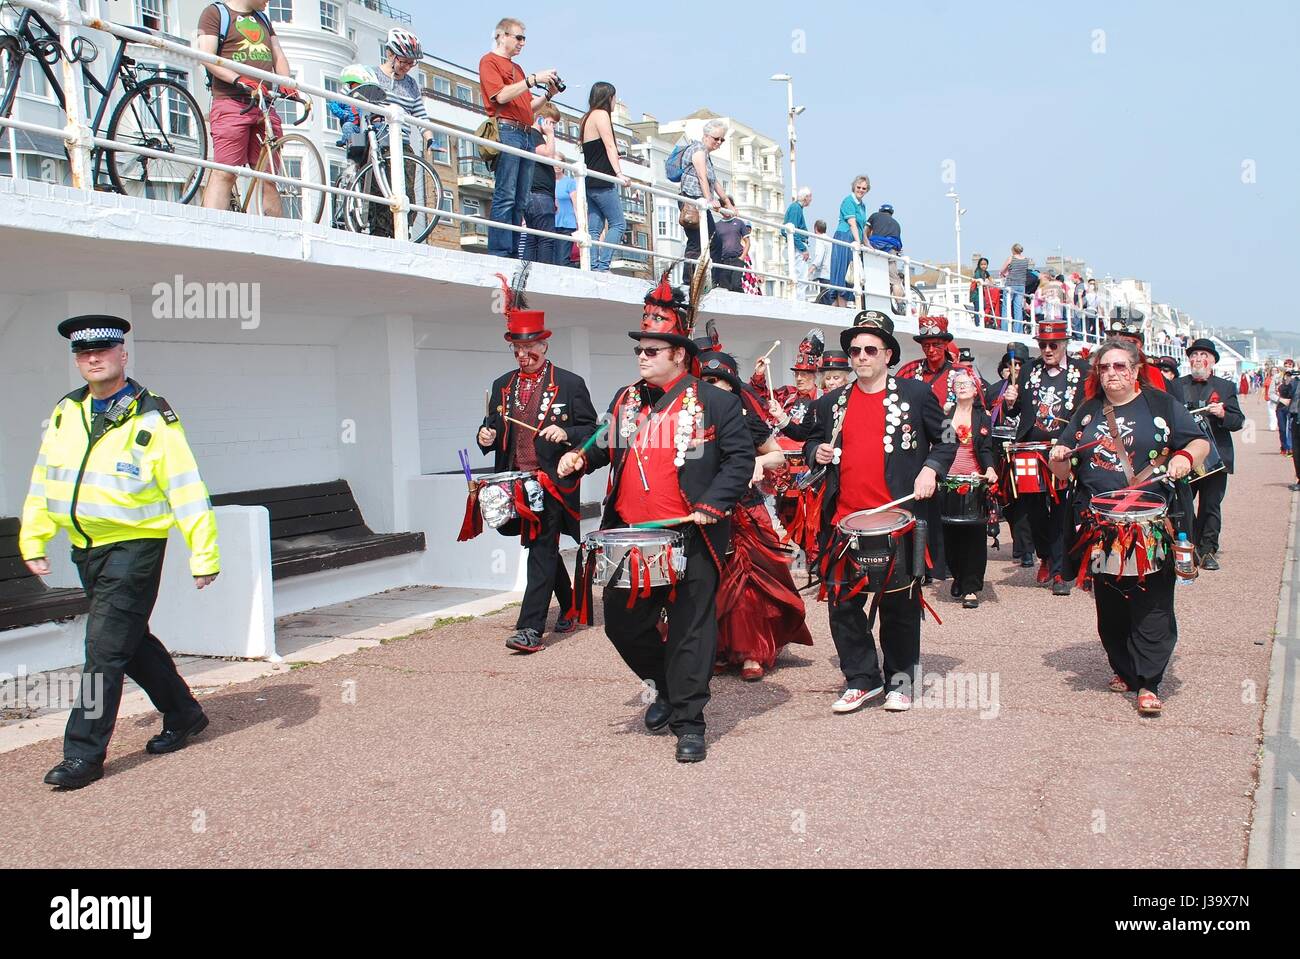 Abschnitt 5 Trommler parade entlang der Strandpromenade während des jährlichen Festivals der St.Leonards bei St.Leonards-on-Sea, England am 12. Juli 2014. Stockfoto